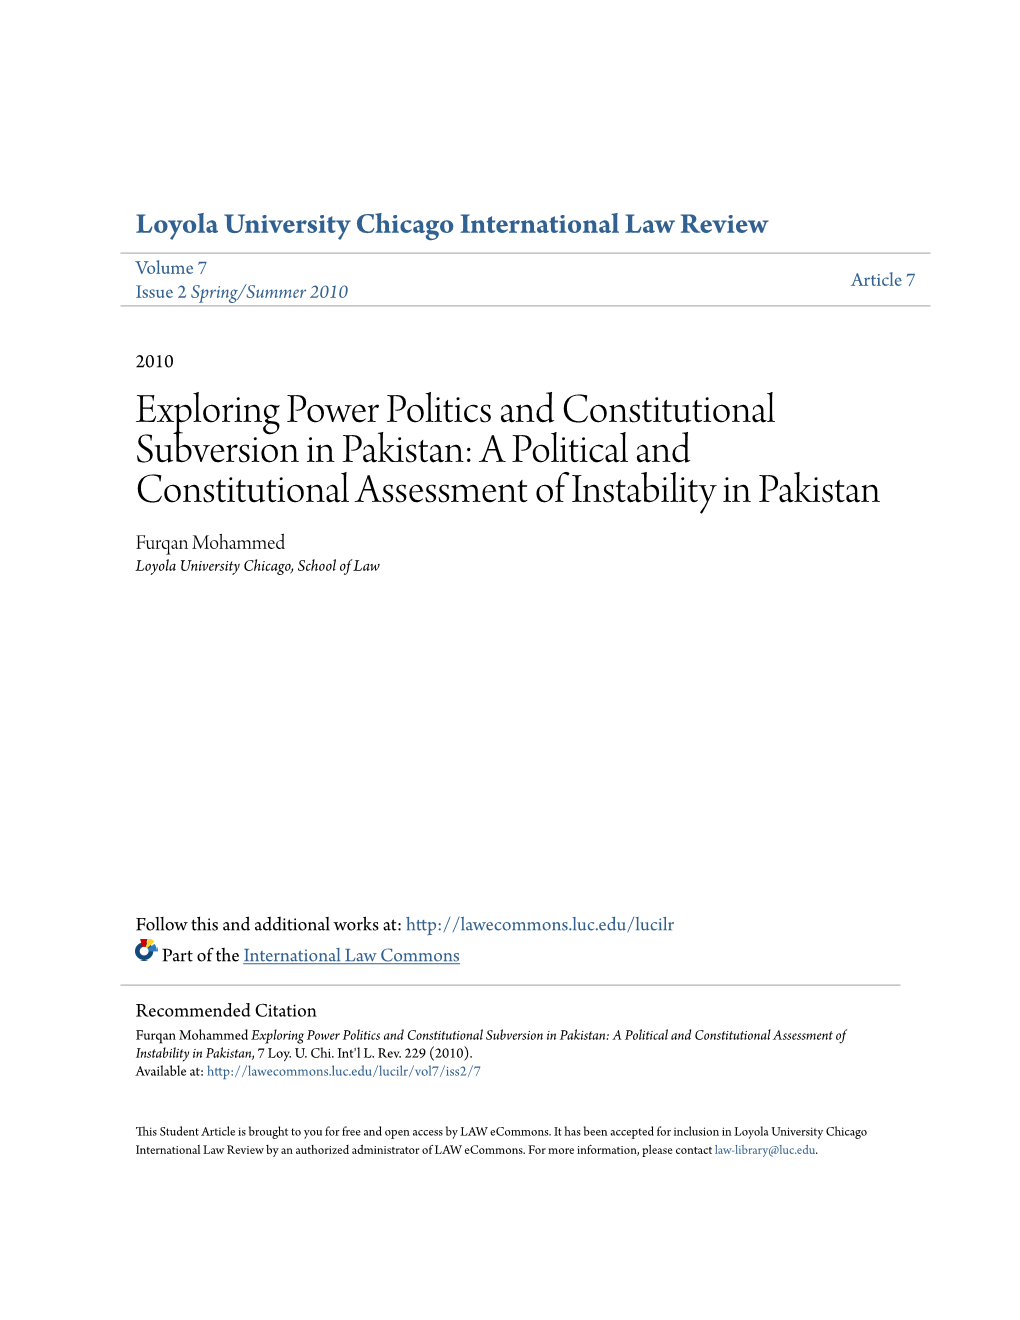 Exploring Power Politics and Constitutional Subversion in Pakistan